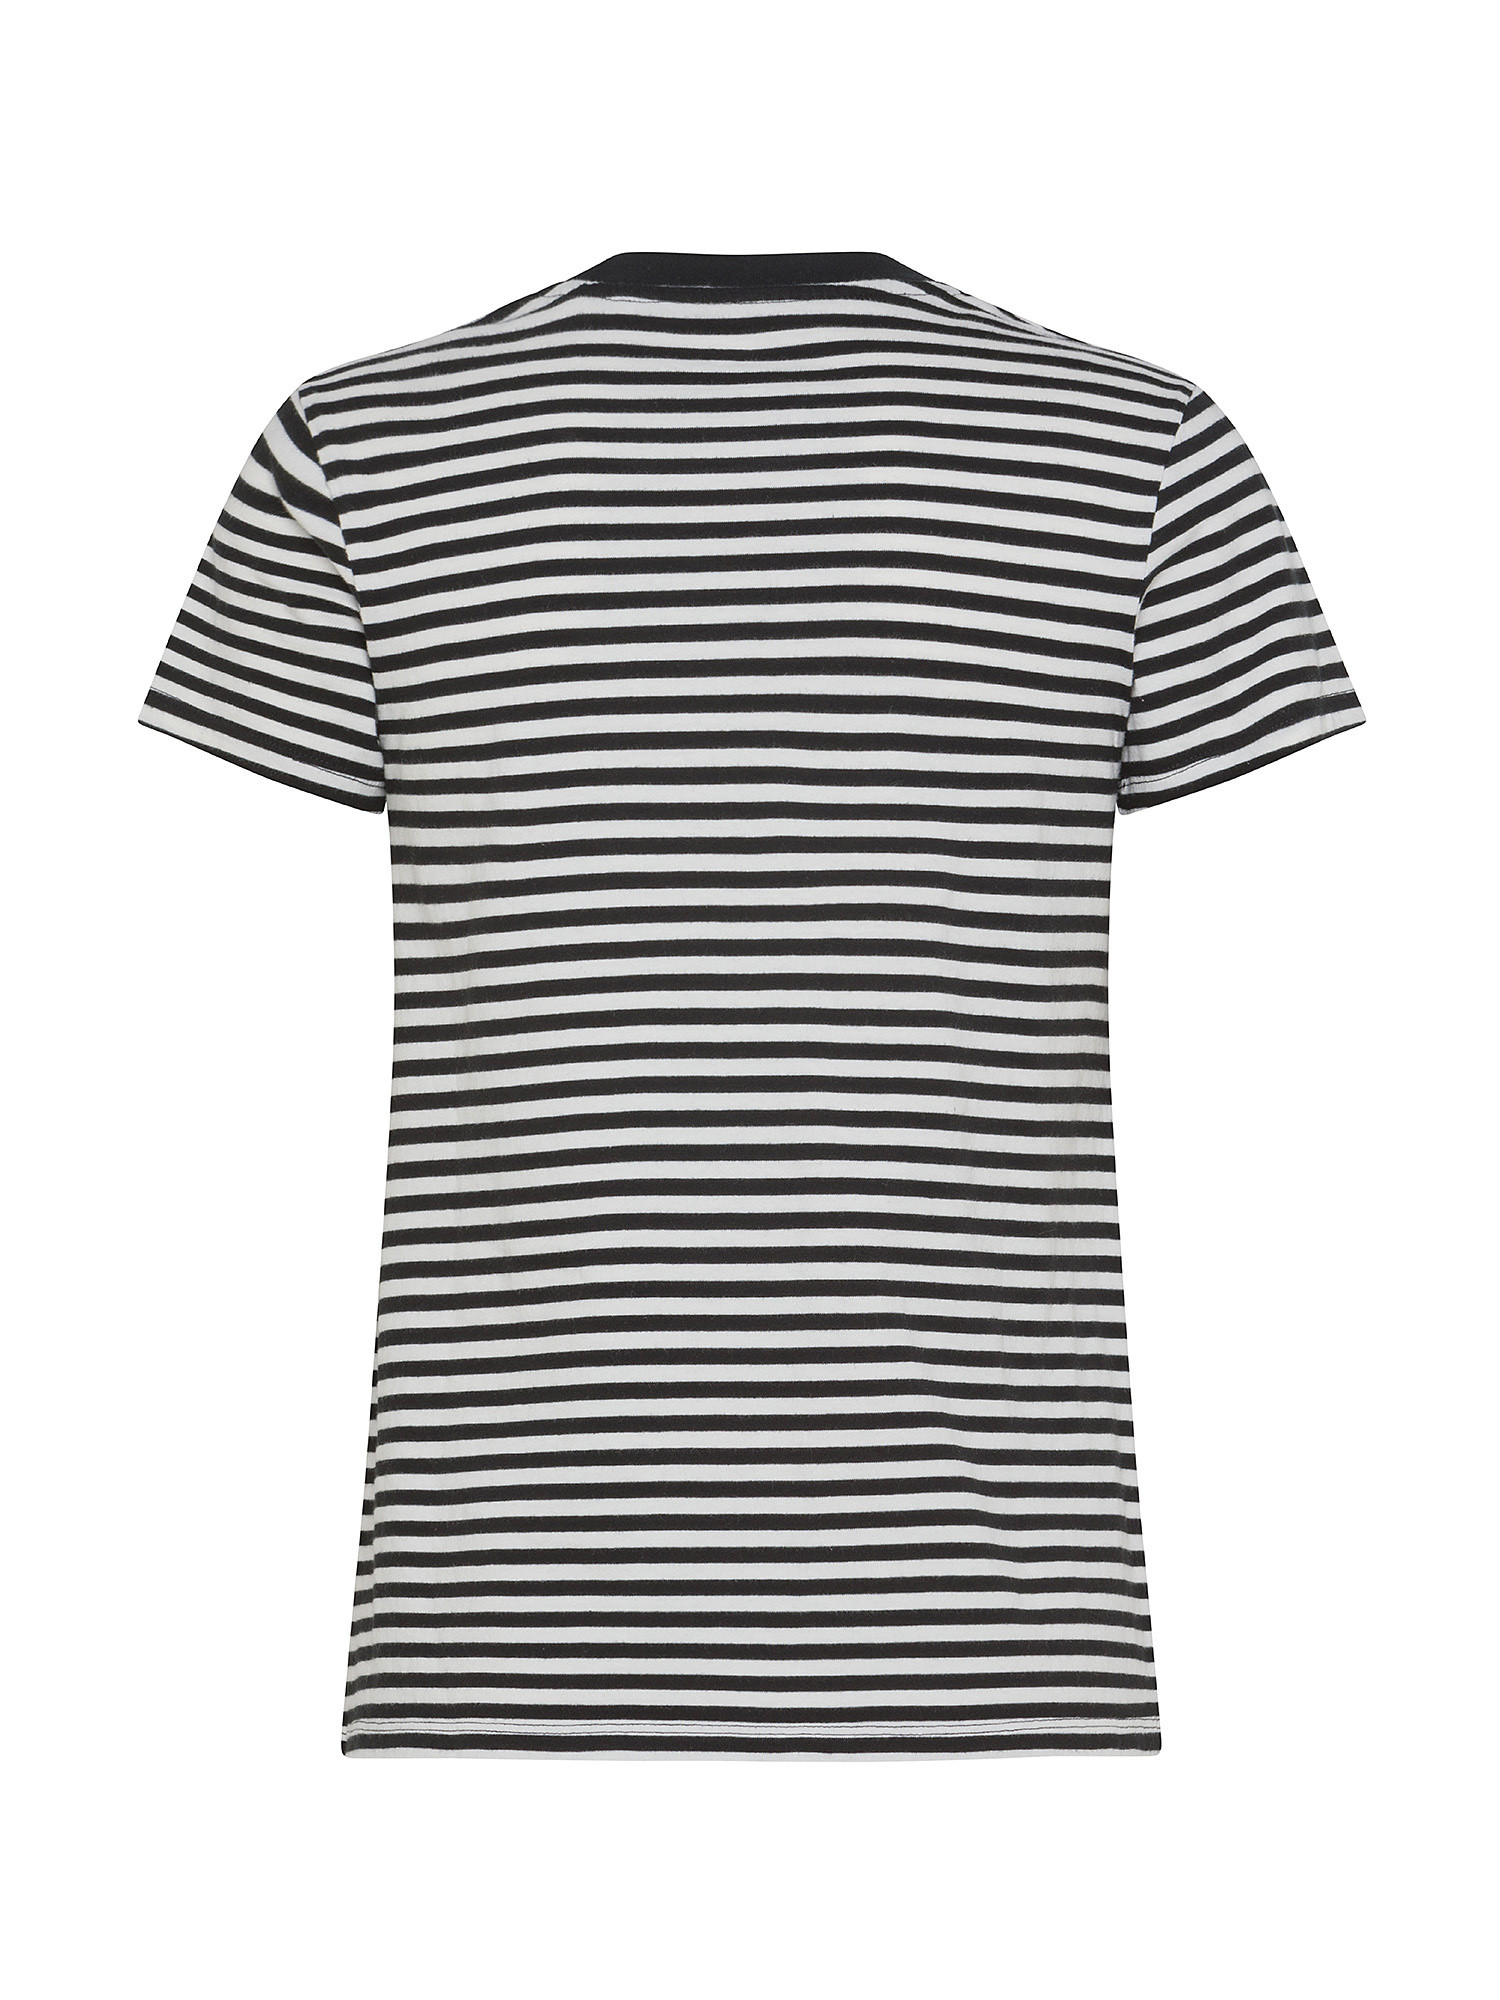 Levi's - Striped T-Shirt, Black, large image number 1